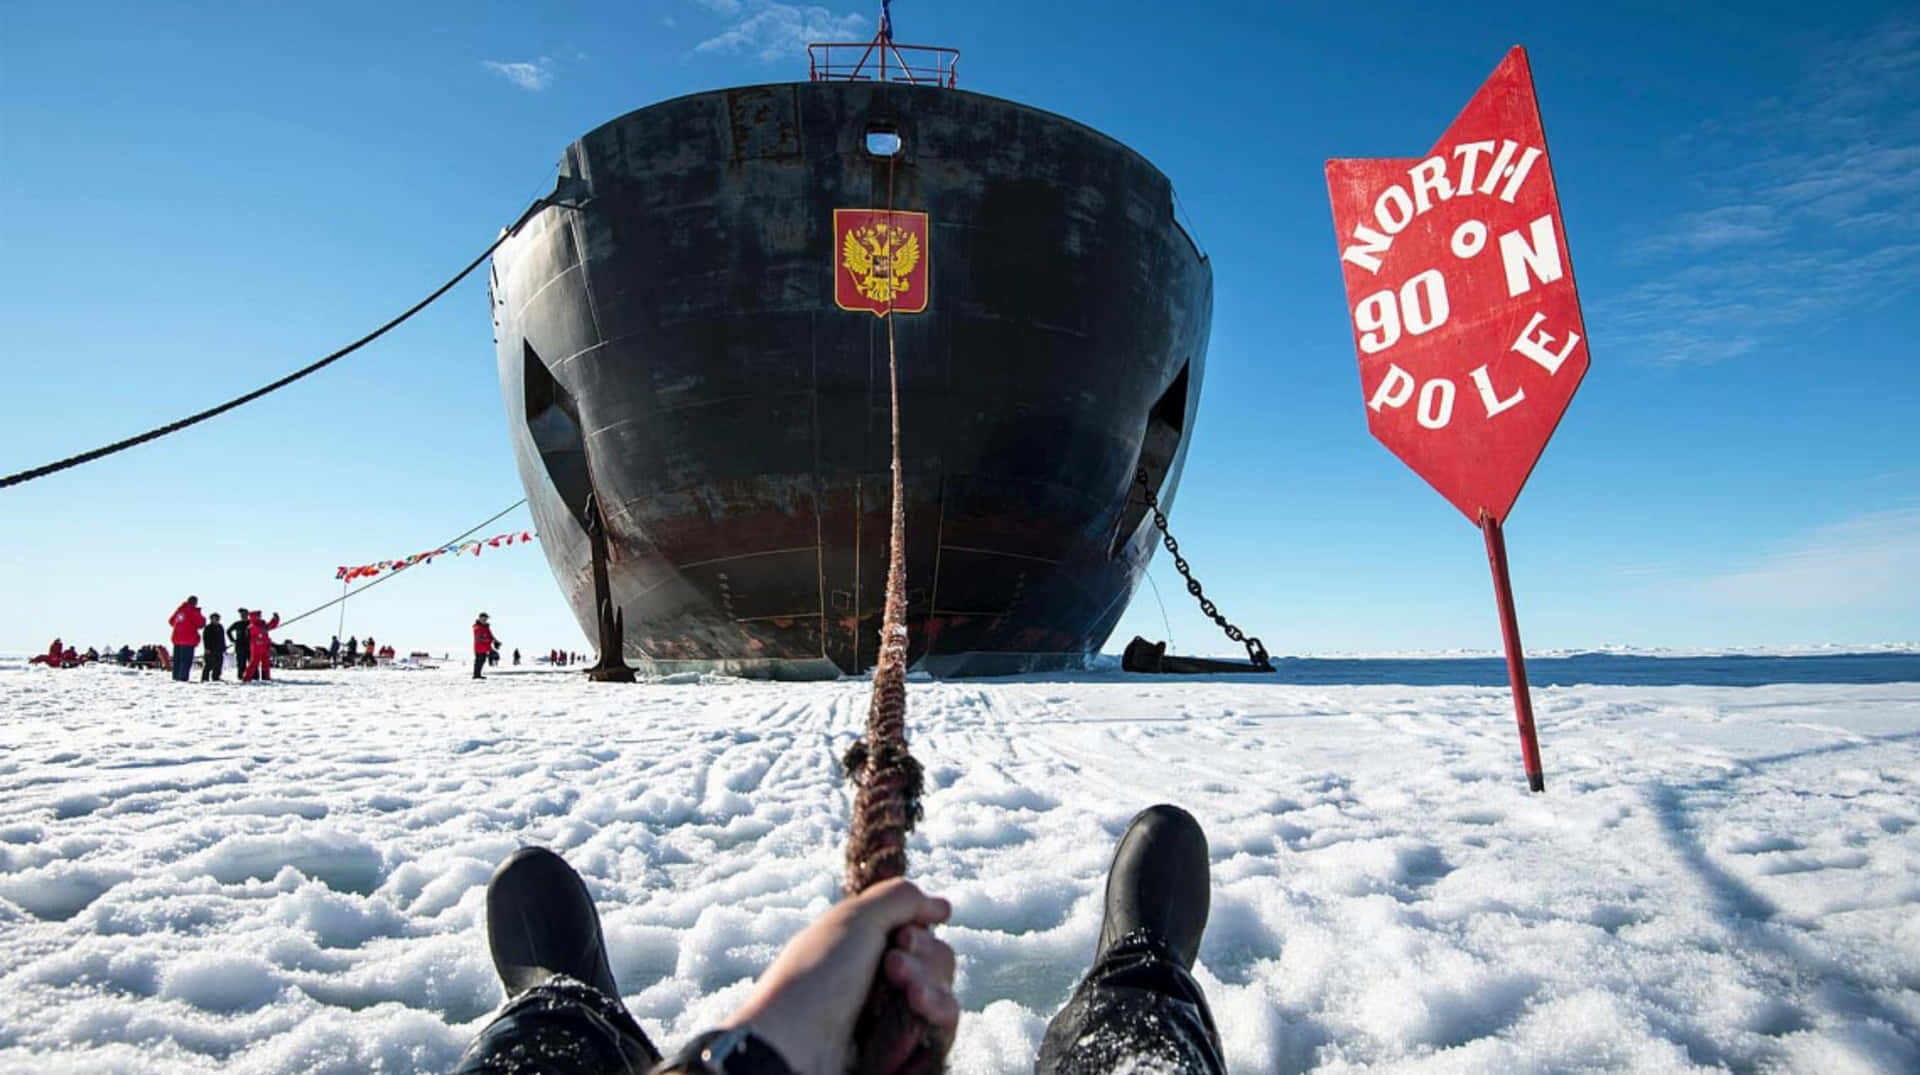 North Pole Cruise Ship Picture